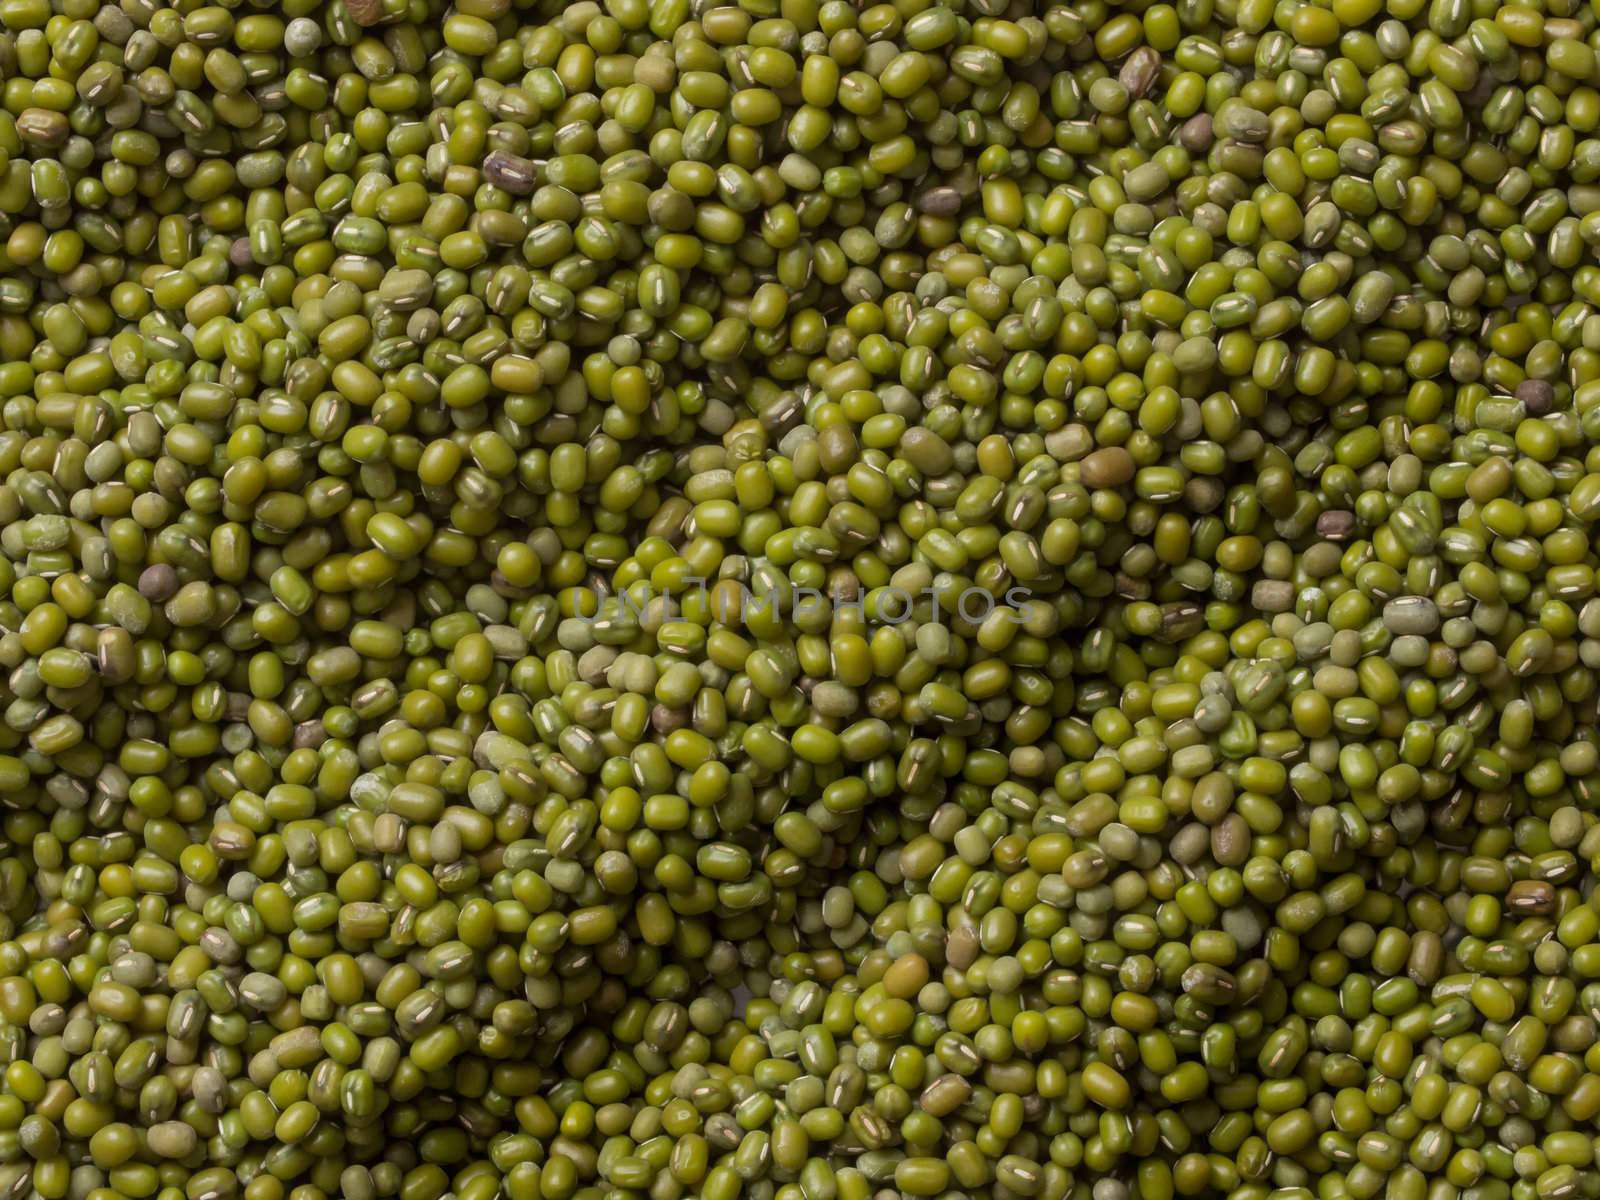 green mung beans by zkruger